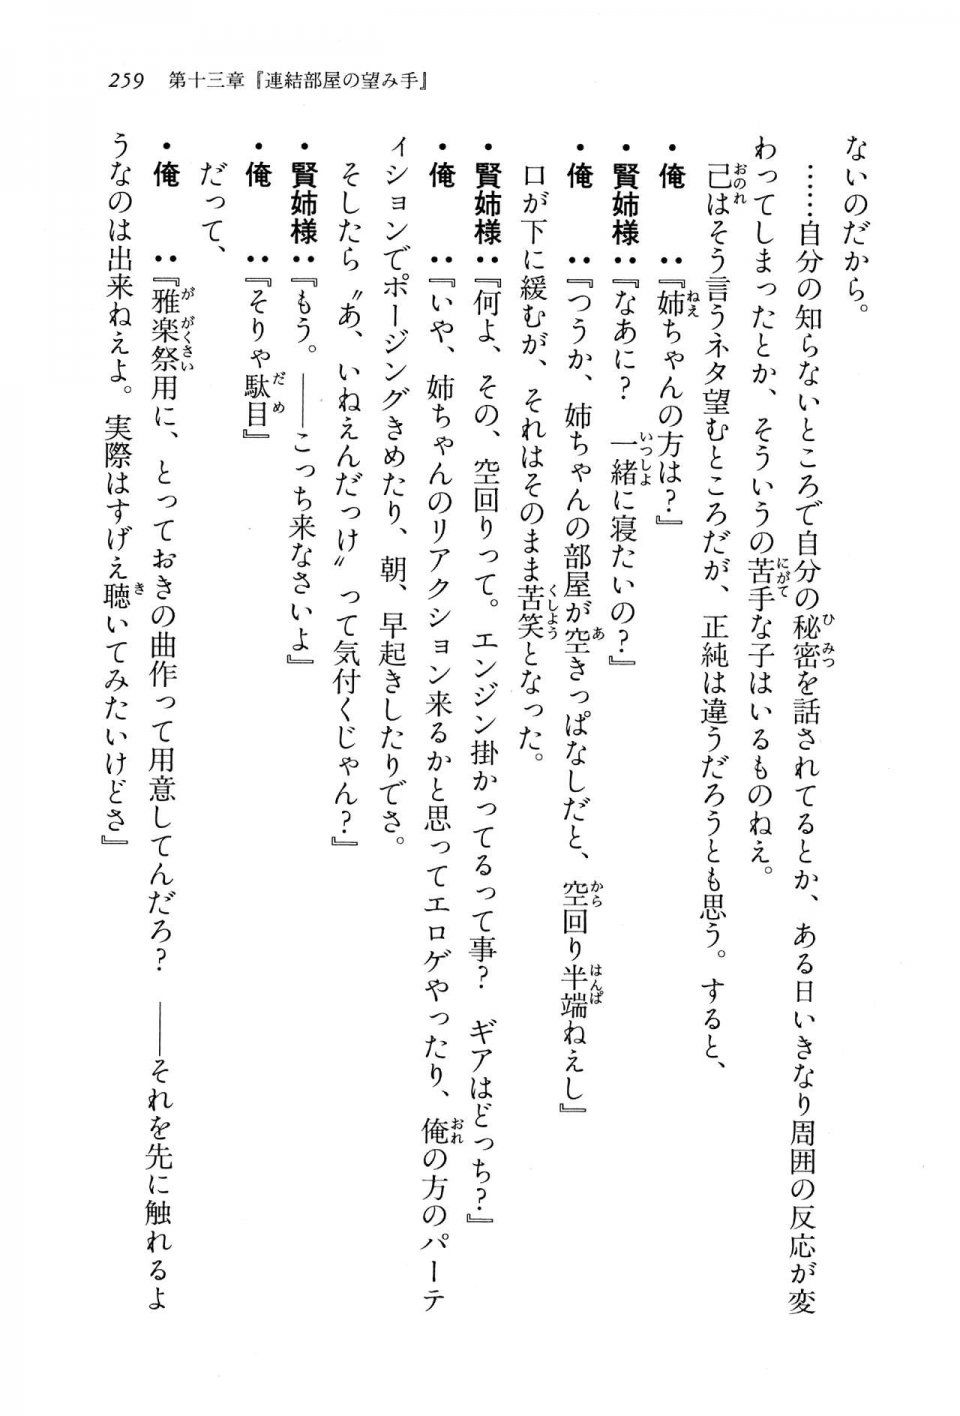 Kyoukai Senjou no Horizon BD Special Mininovel Vol 8(4B) - Photo #263